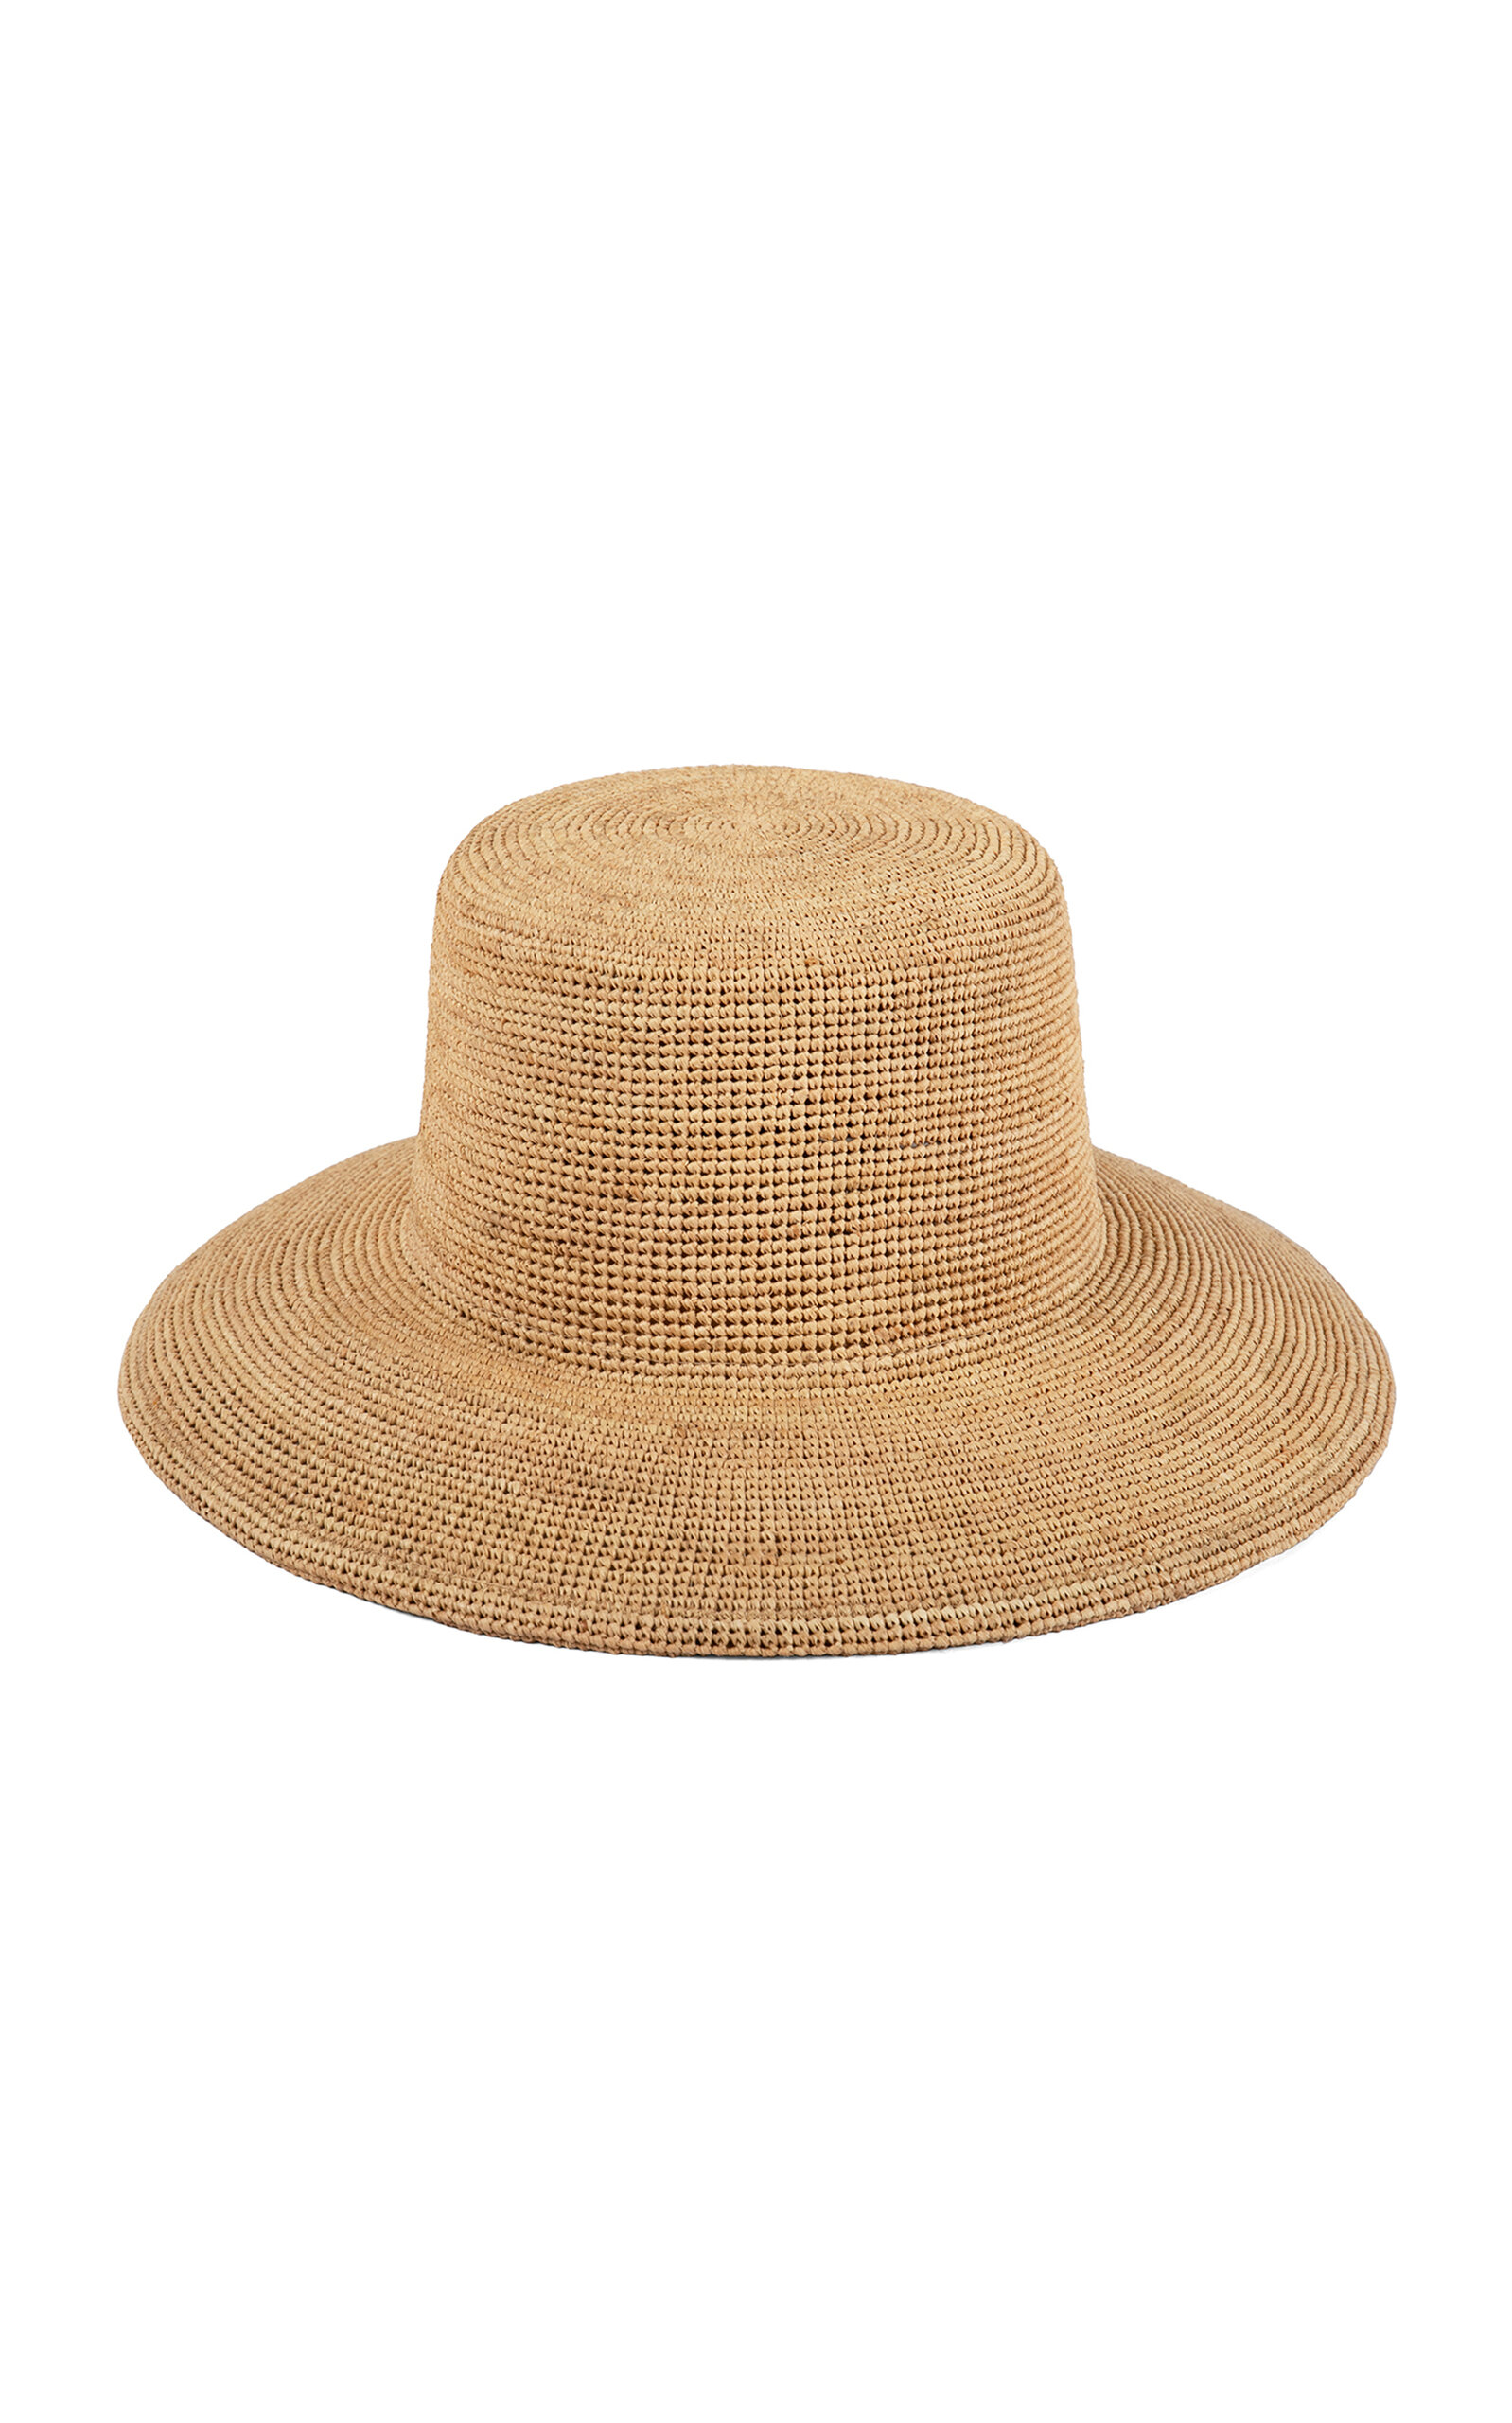 The Inca Wide Raffia Bucket Hat